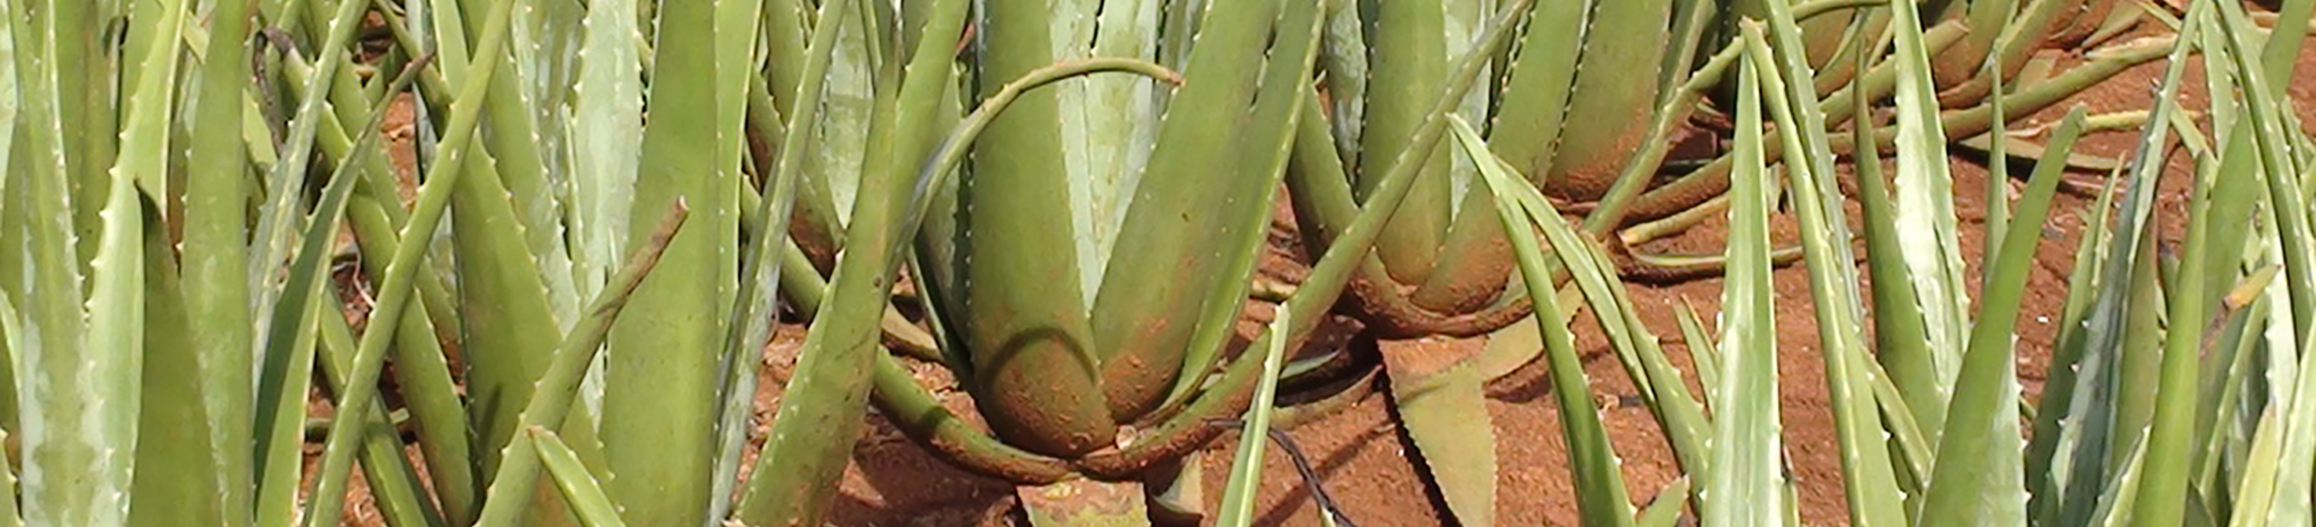 BiAloe - The Perfection of Aloe vera Processing™